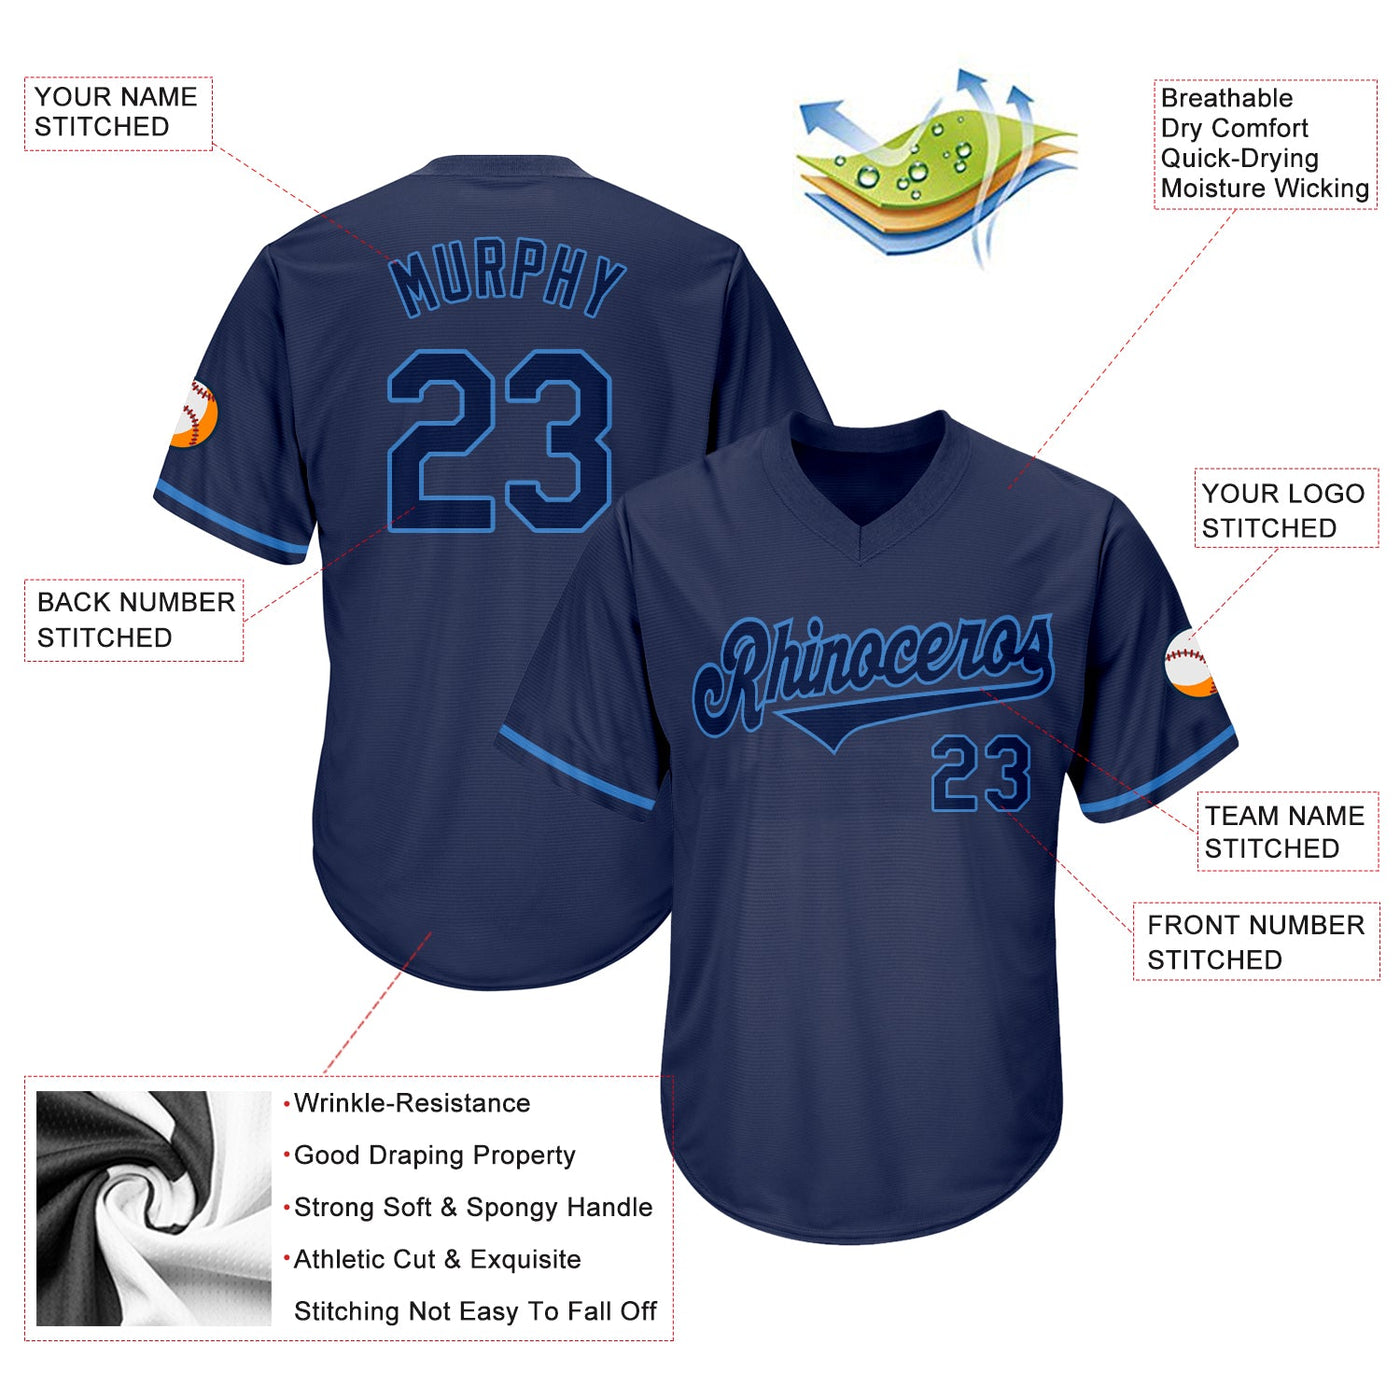 Custom Navy Navy-Powder Blue Authentic Throwback Rib-Knit Baseball Jersey Shirt - Owls Matrix LTD